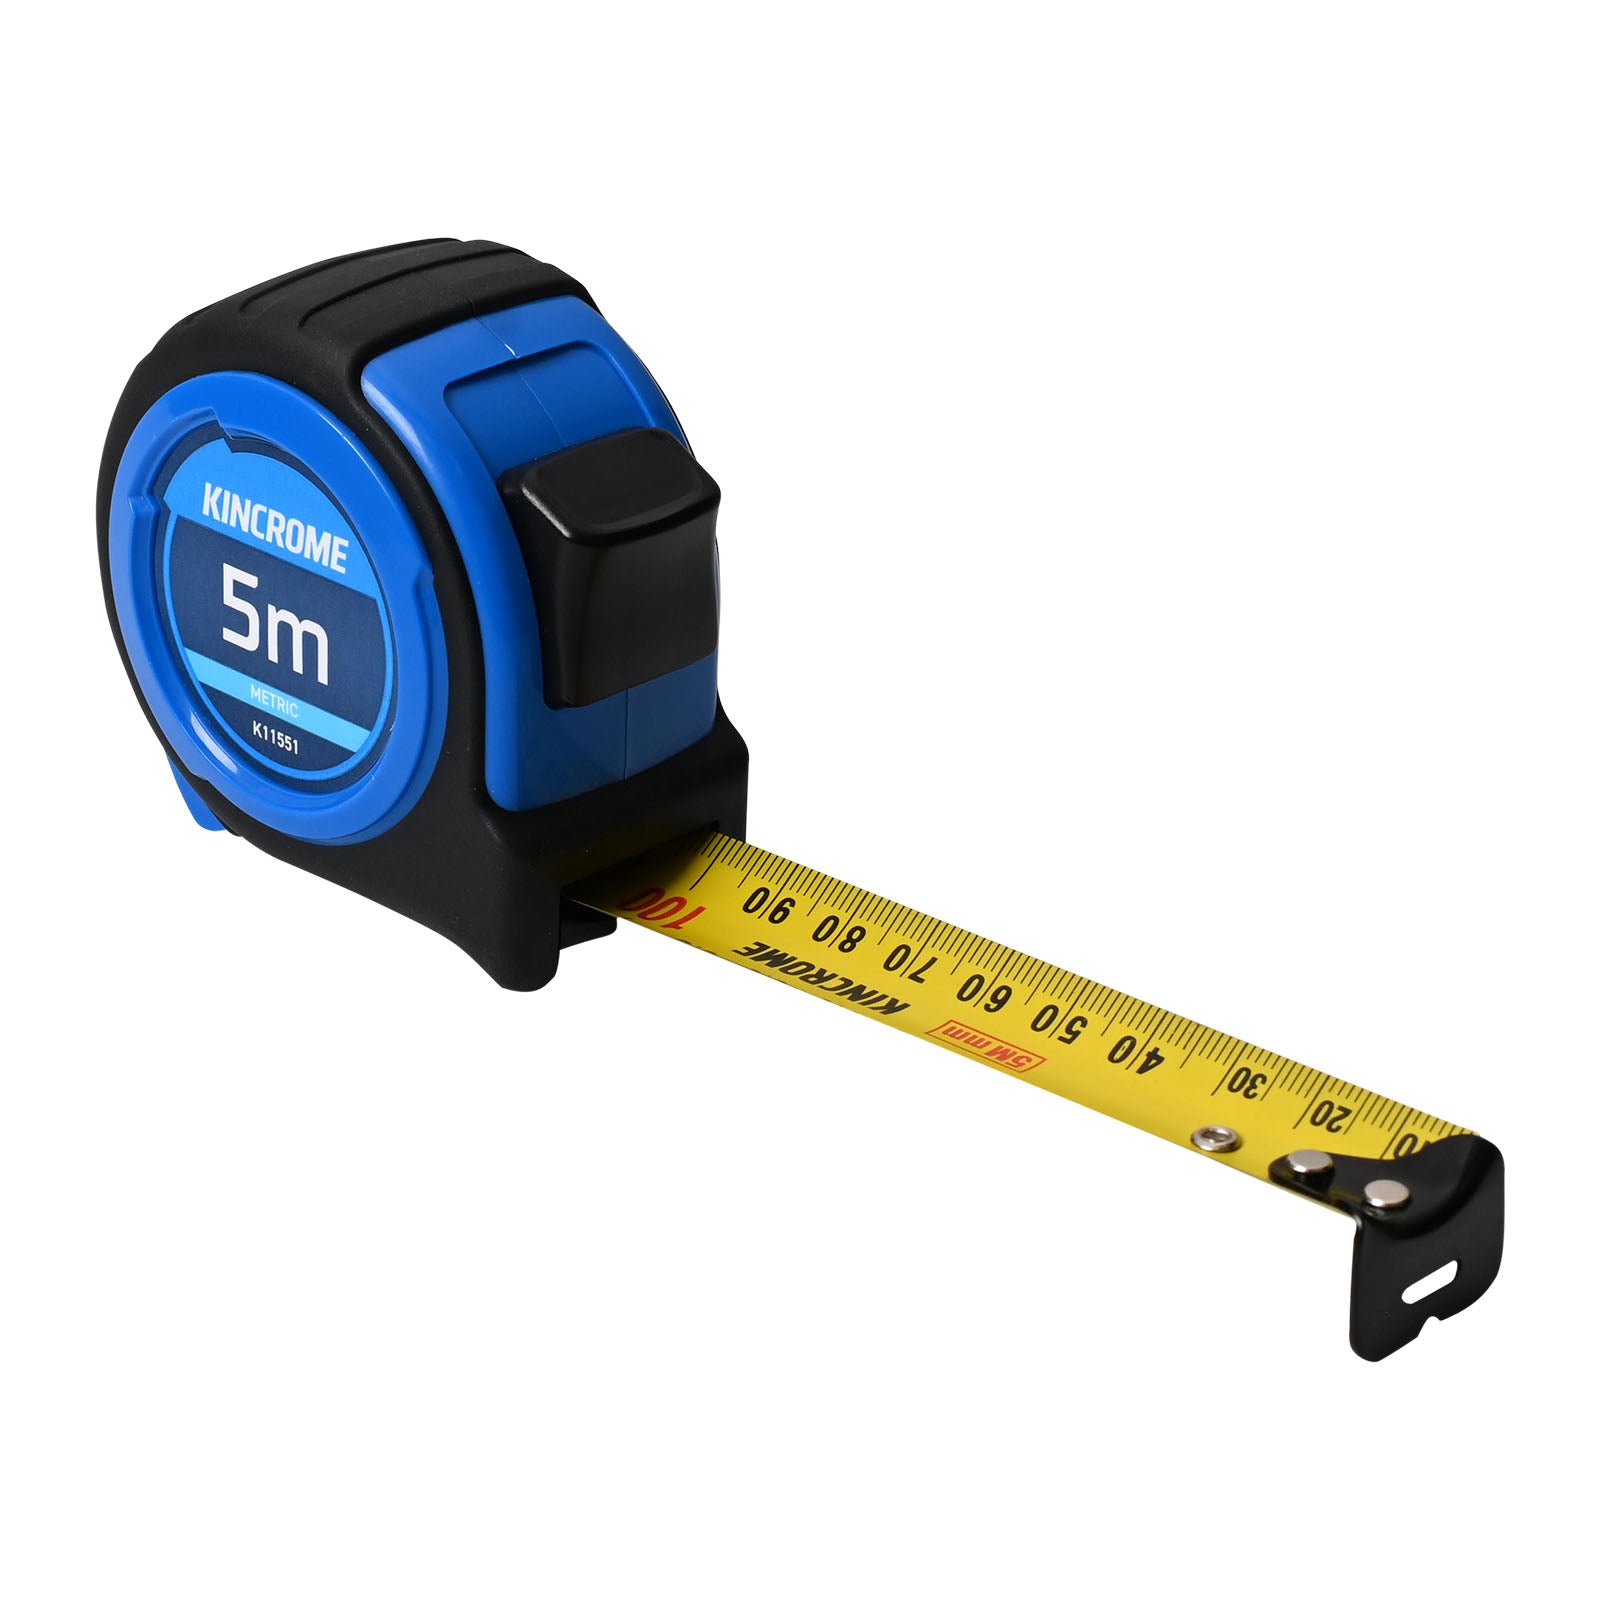 5m Tape Measure, Metric - K11551 by Kincrome